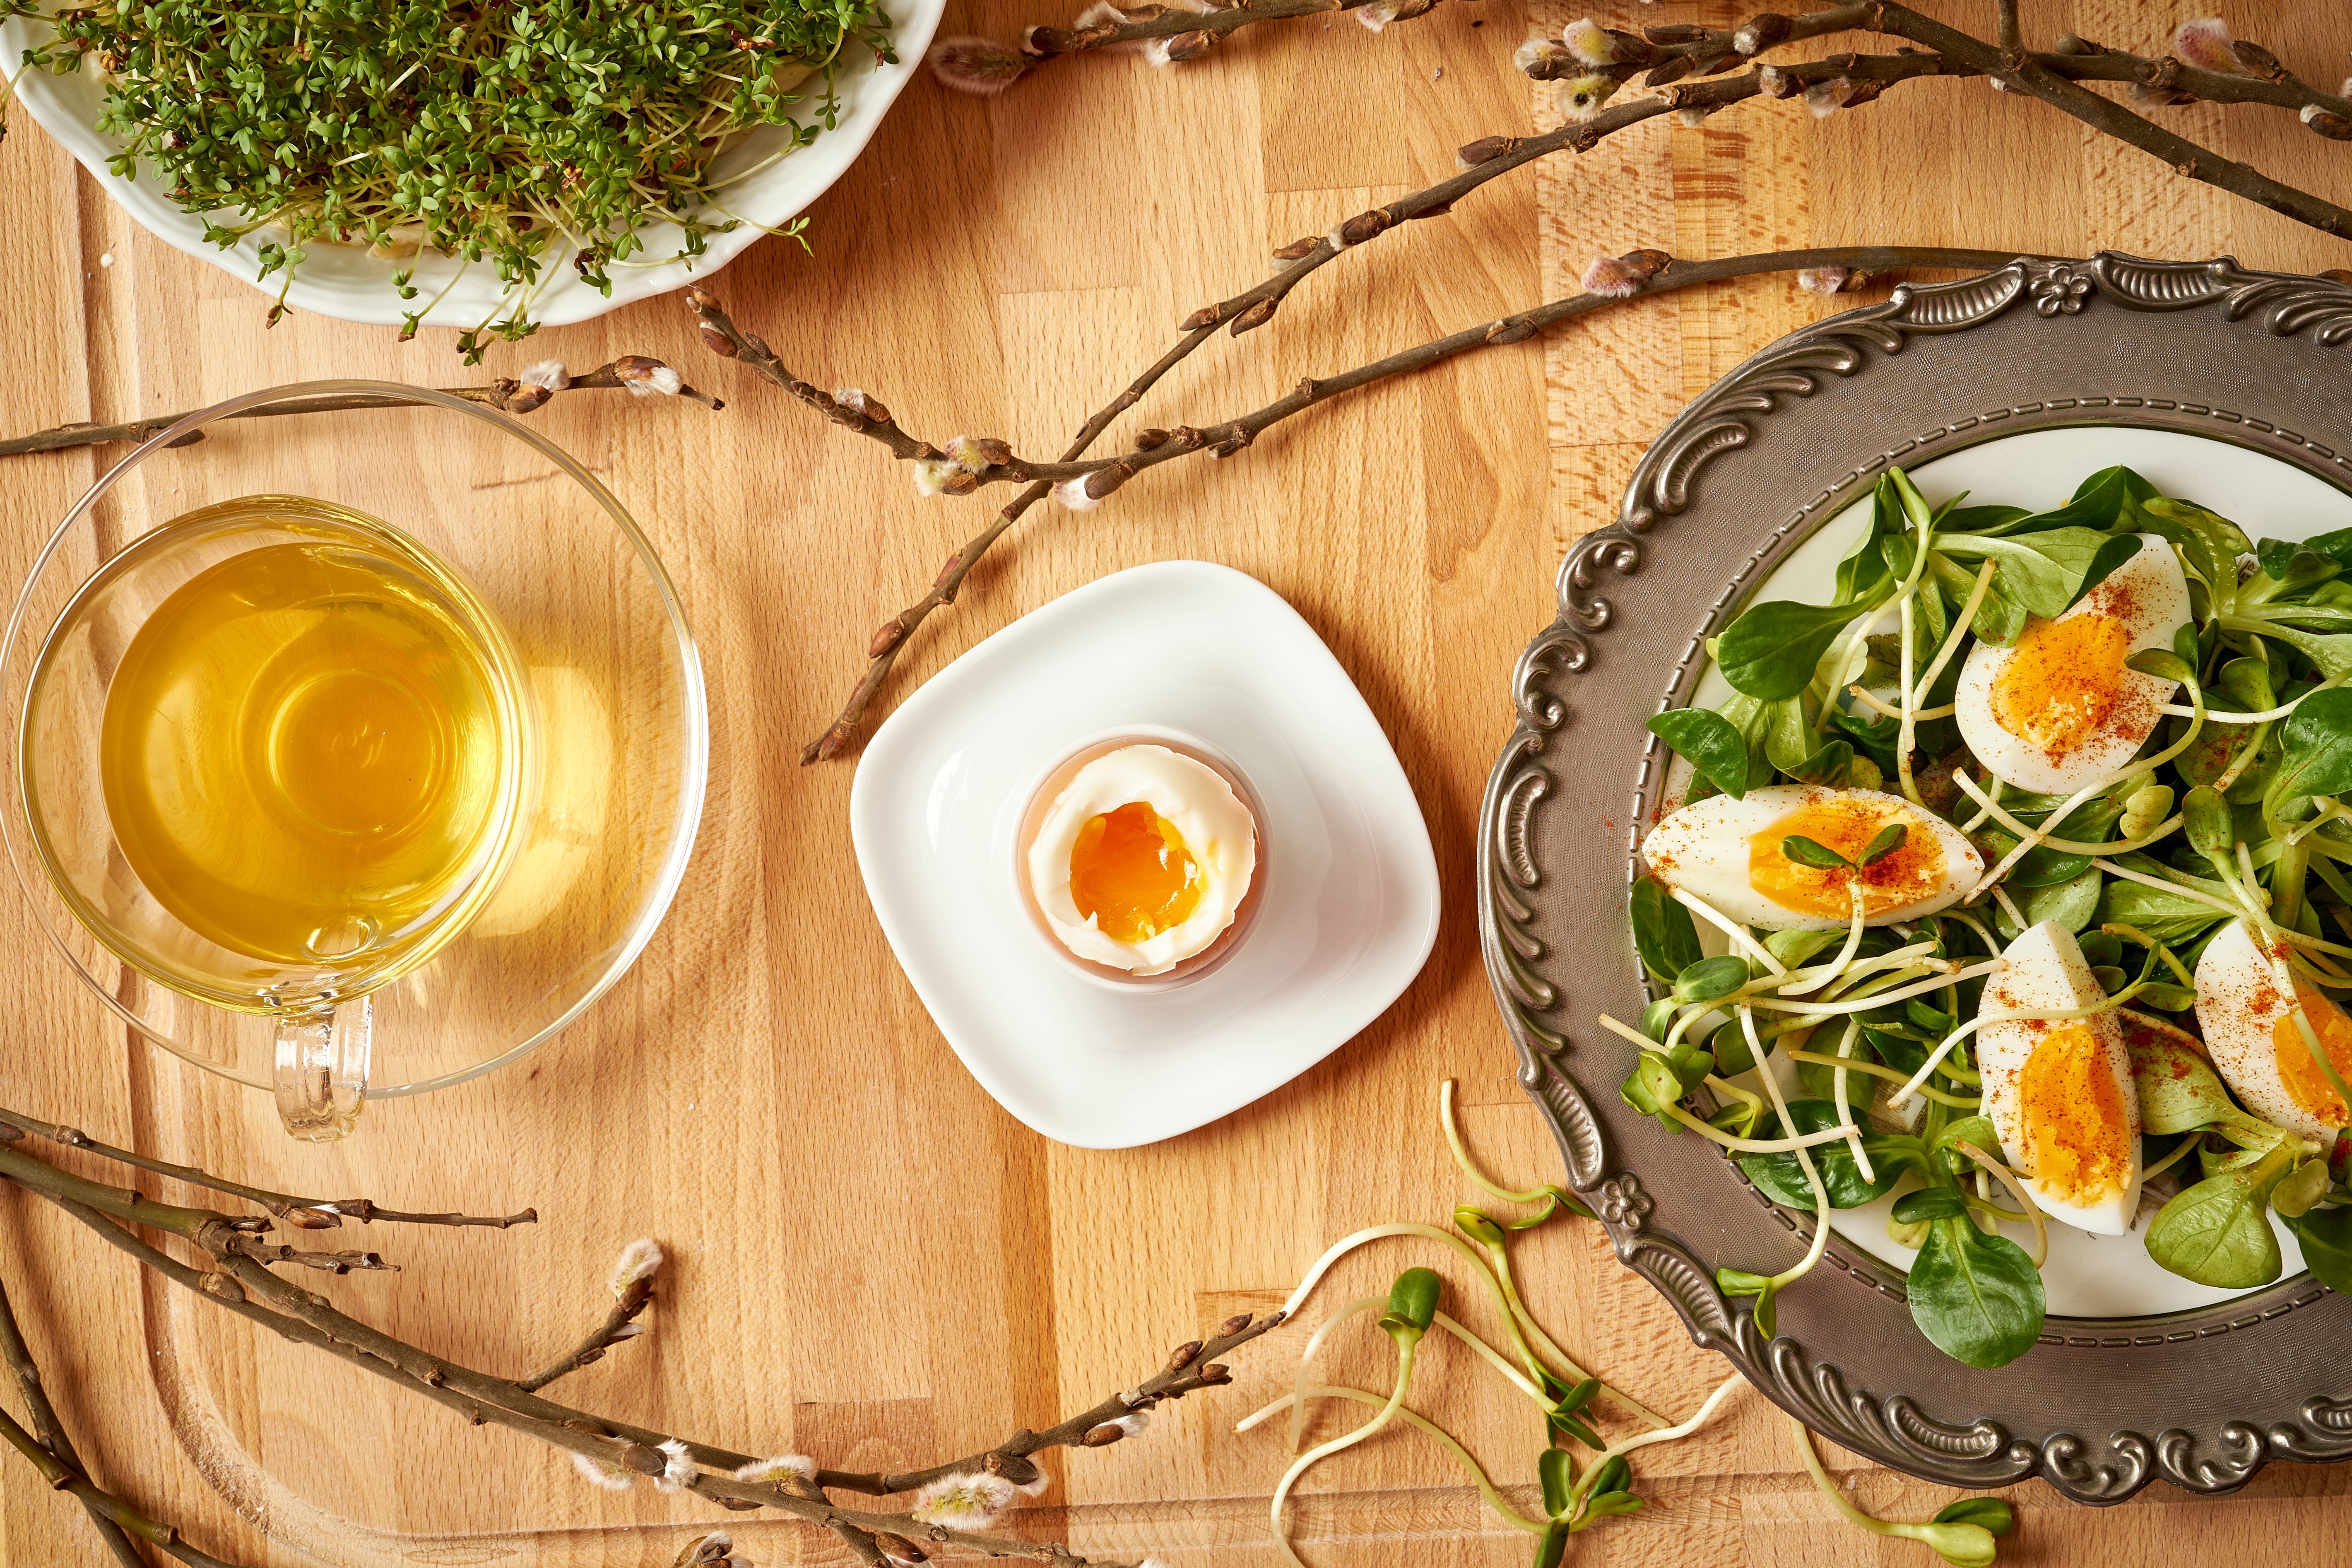  Салати на Великдень 2019: 5 смачних рецептів до великоднього столу